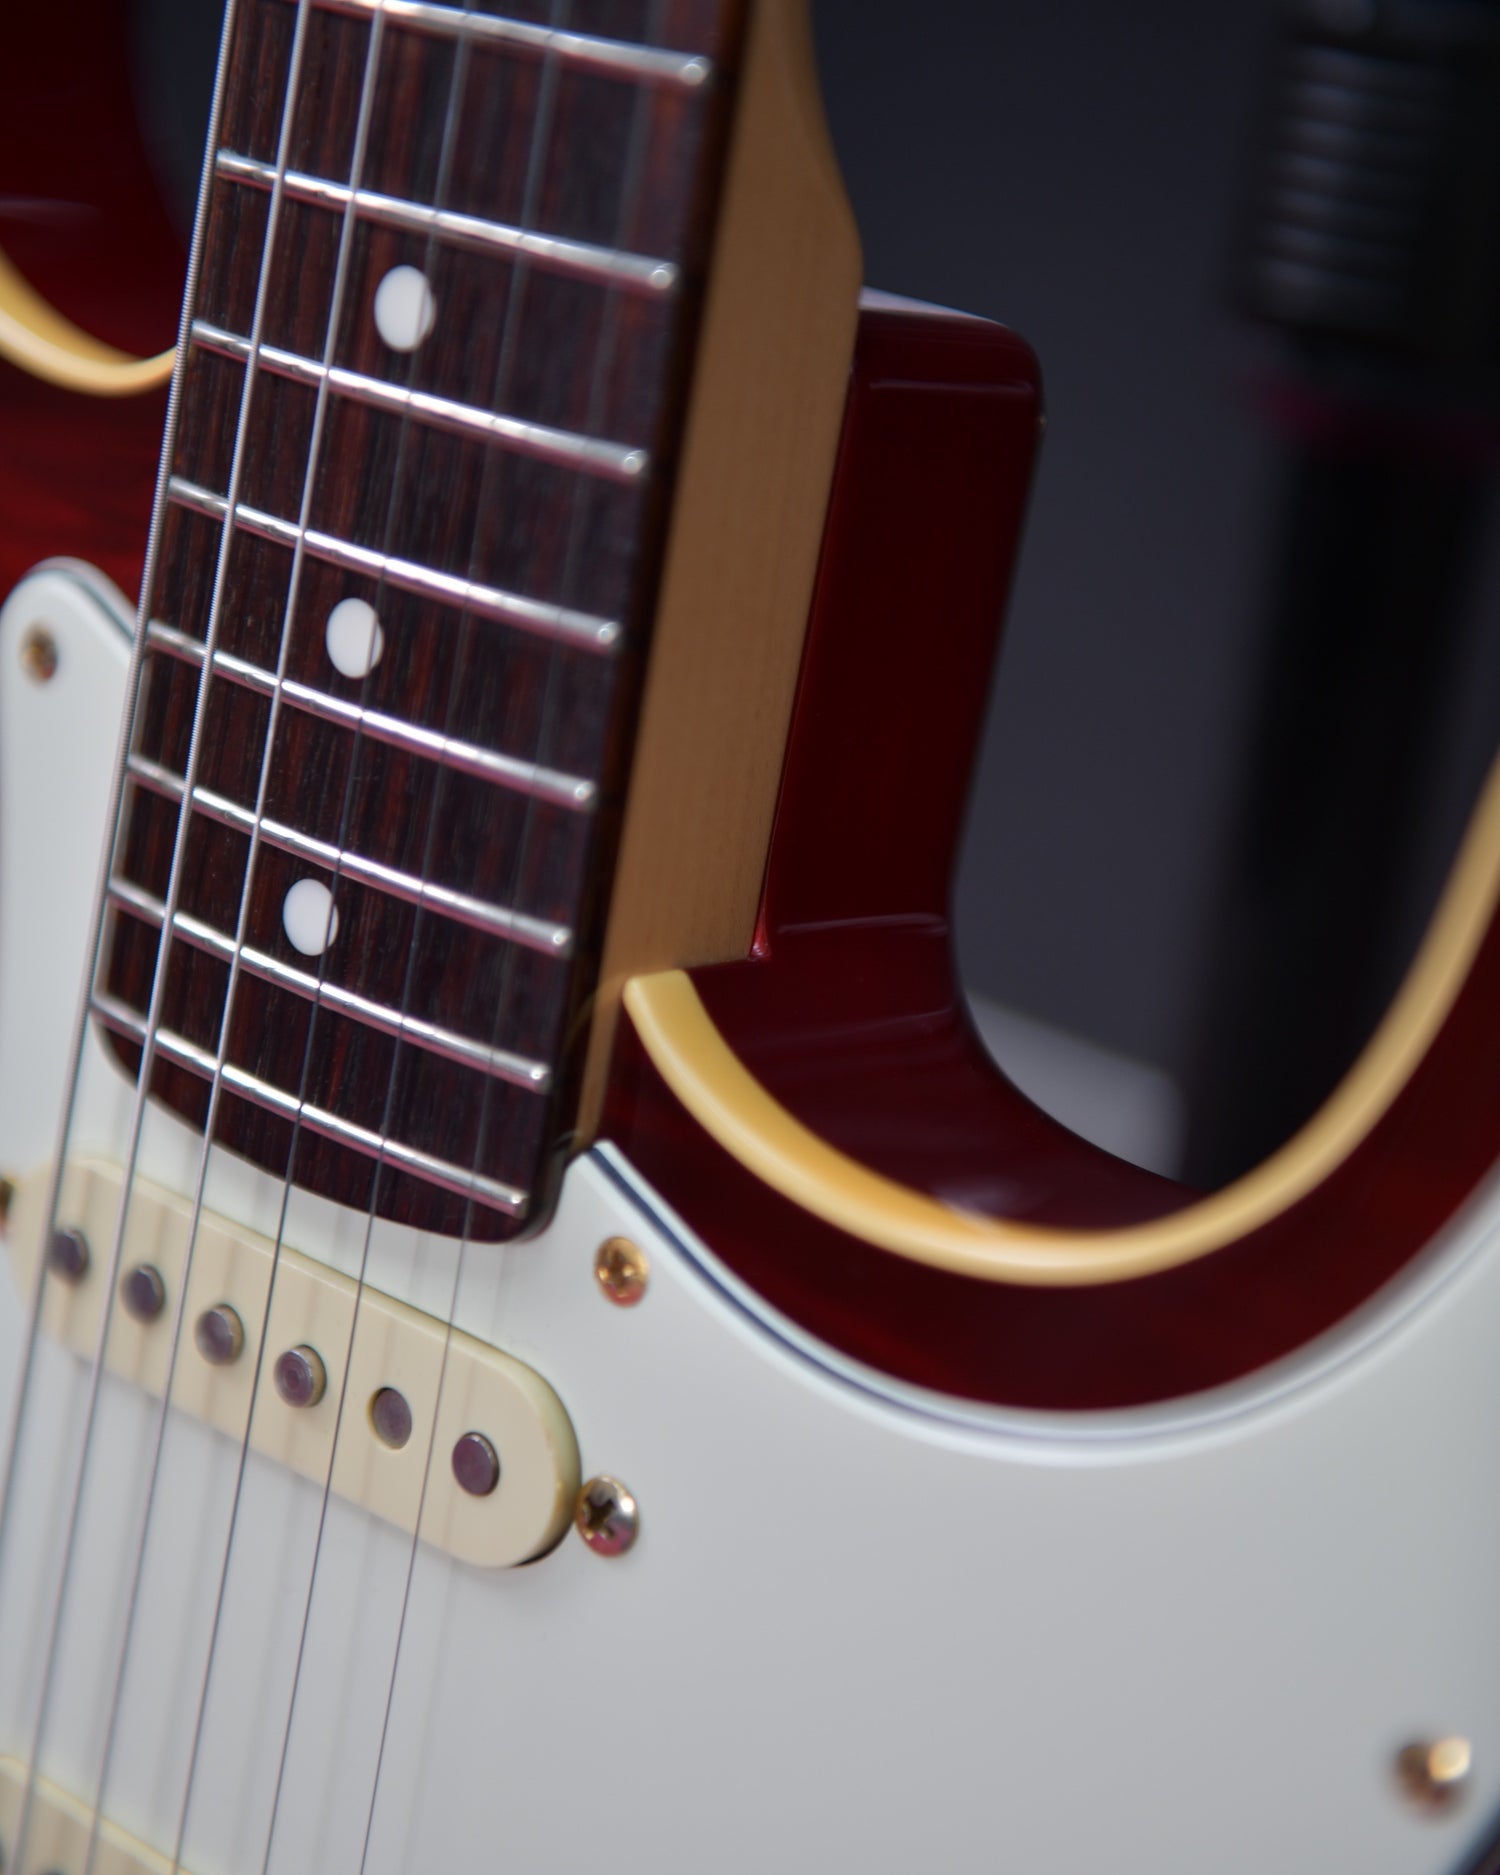 Fender Aerodyne Stratocaster Japan Limited Edition 2014 [AST / G KOA] Core Material Top 2014